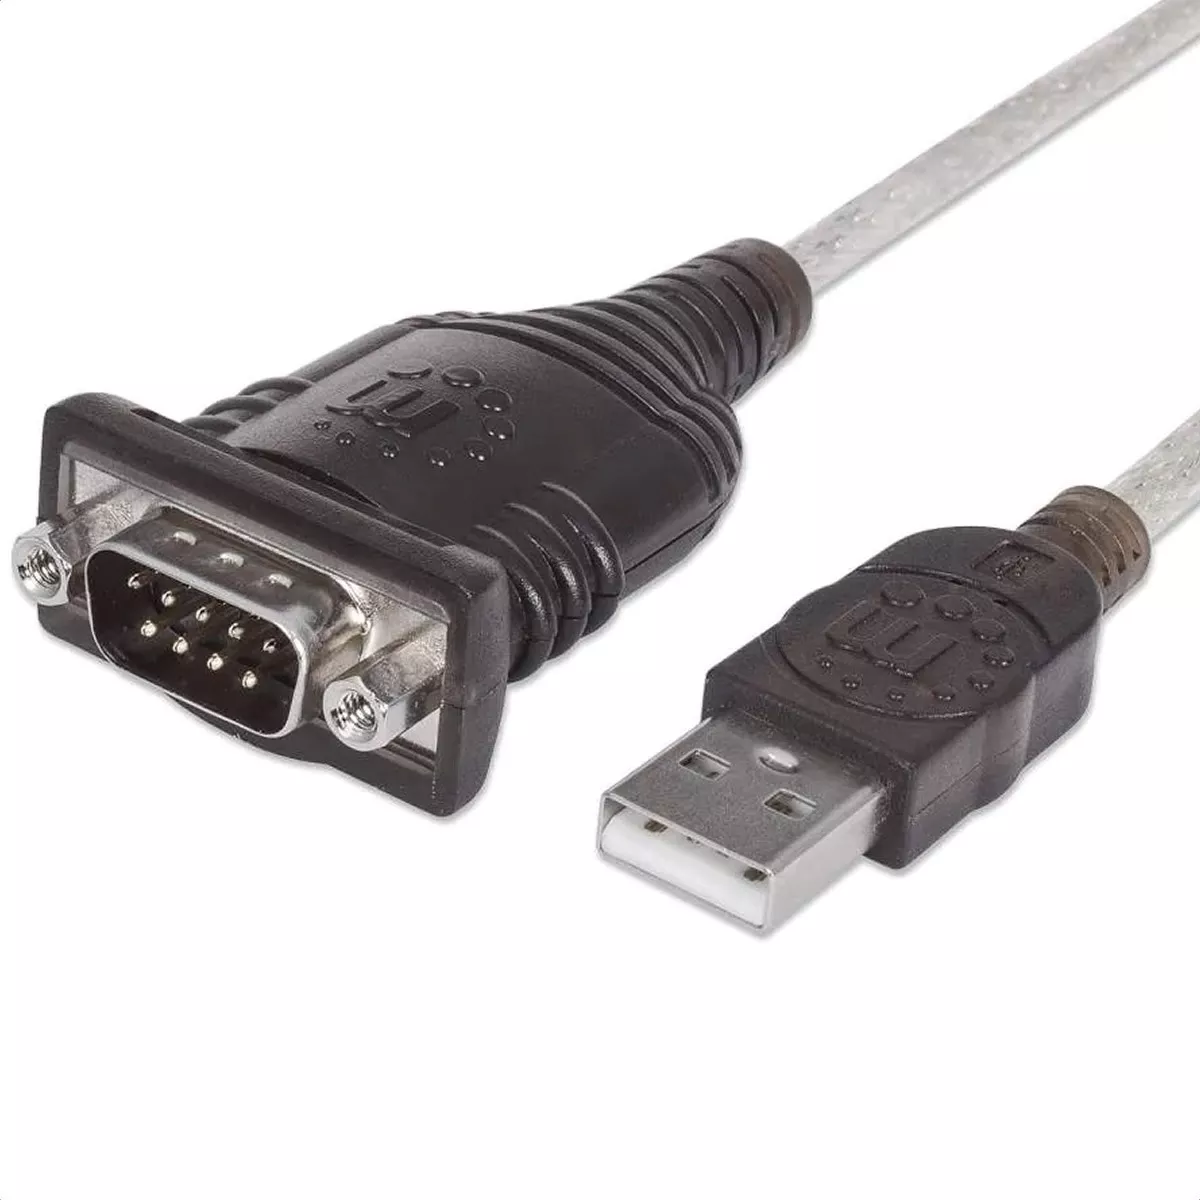 Segunda imagen para búsqueda de cable adaptador serial a usb